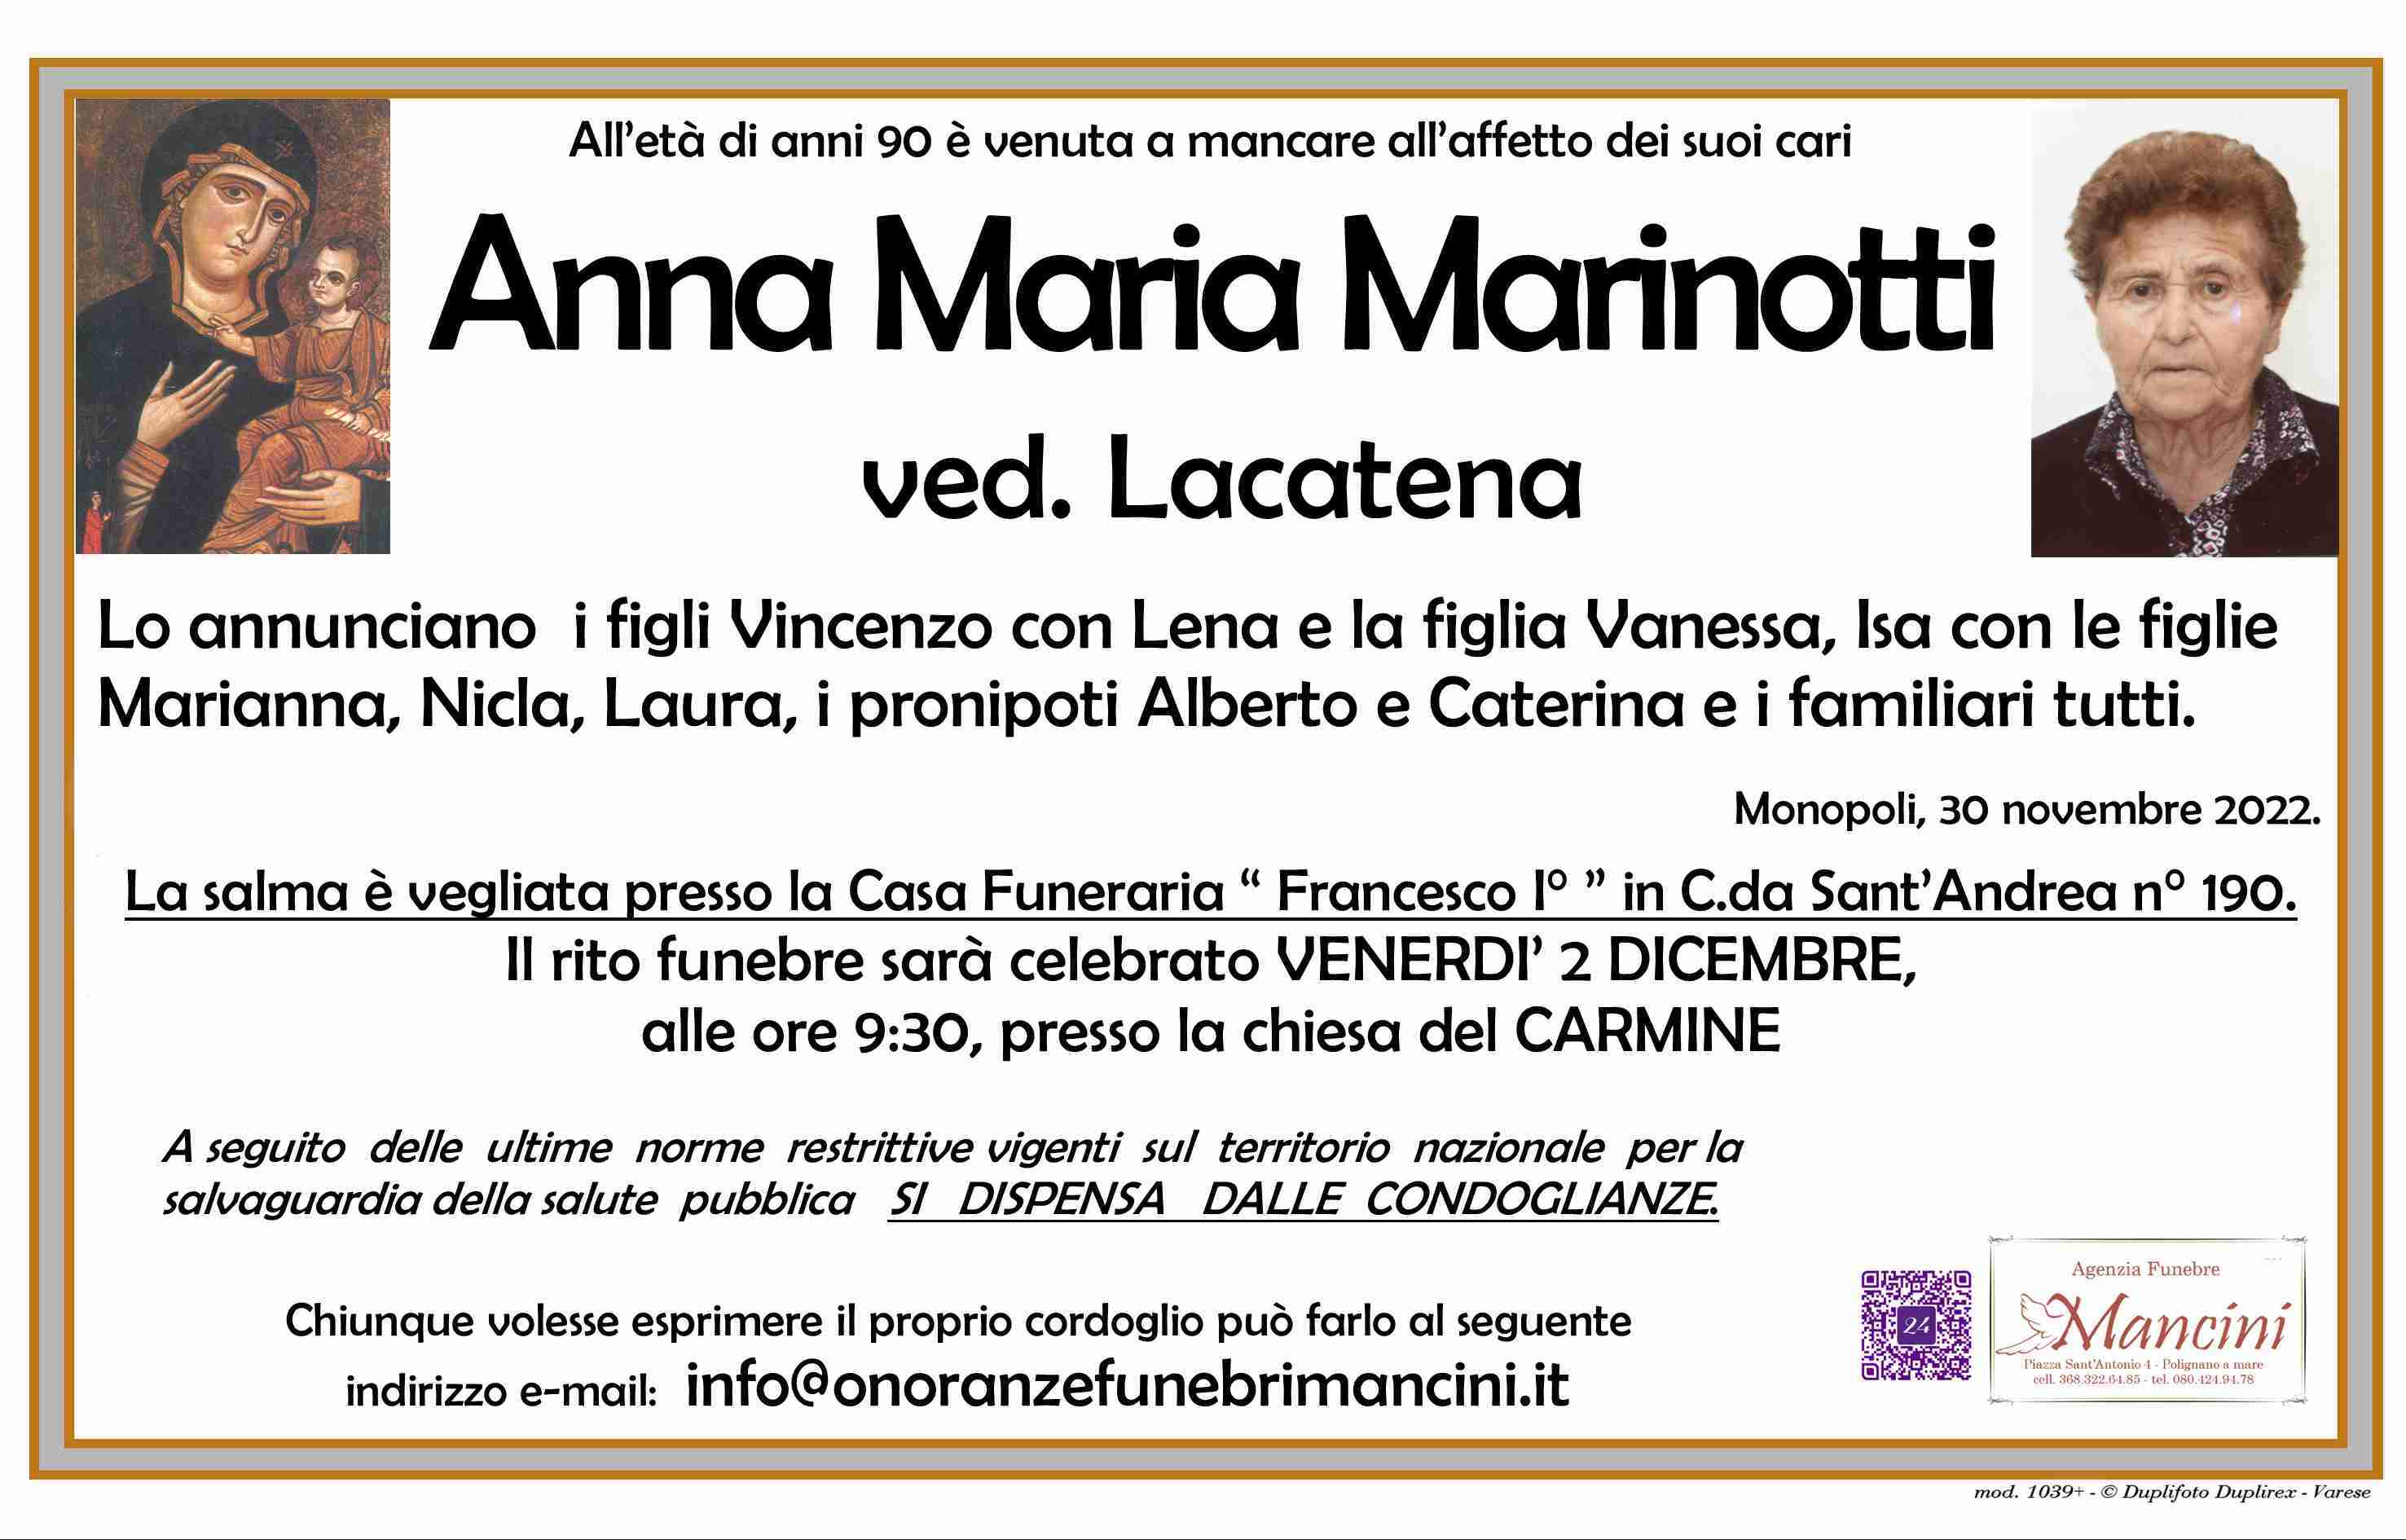 Anna Maria Marinotti